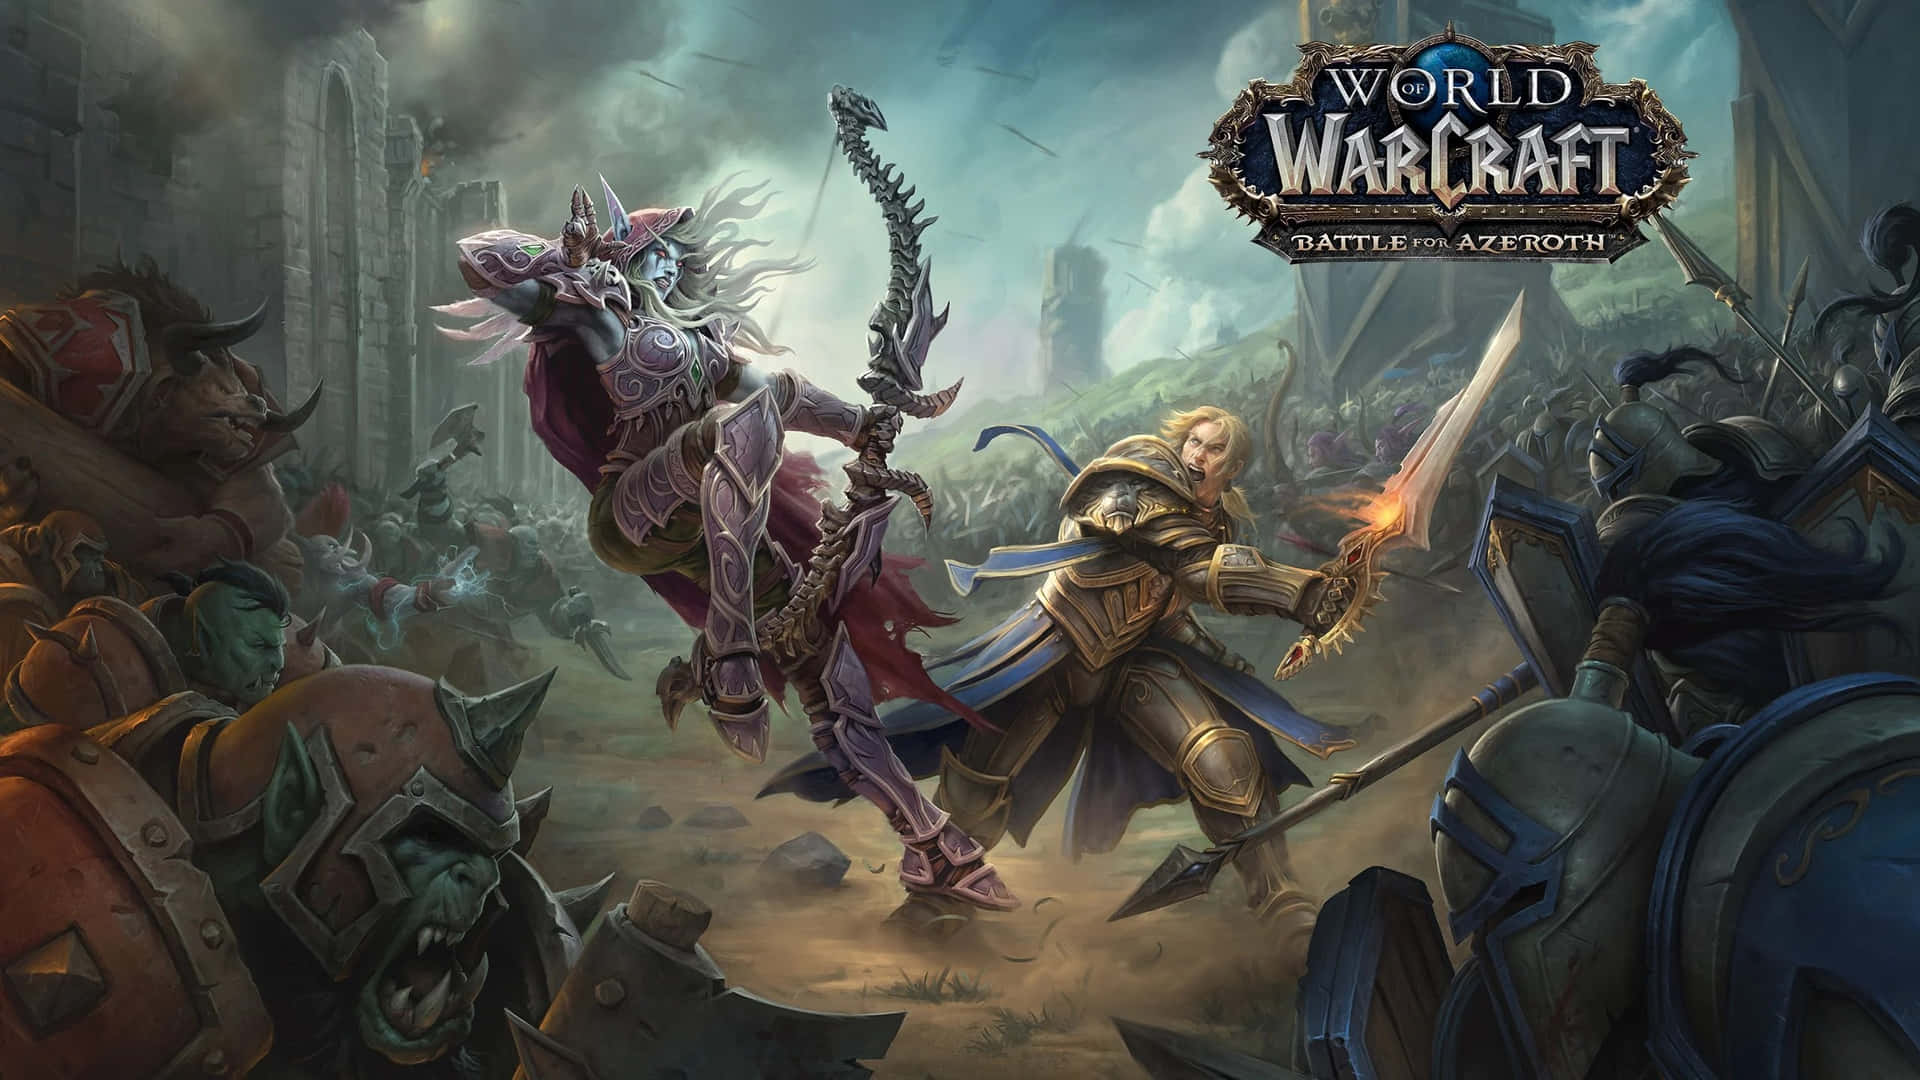 Epic battle in World of Warcraft